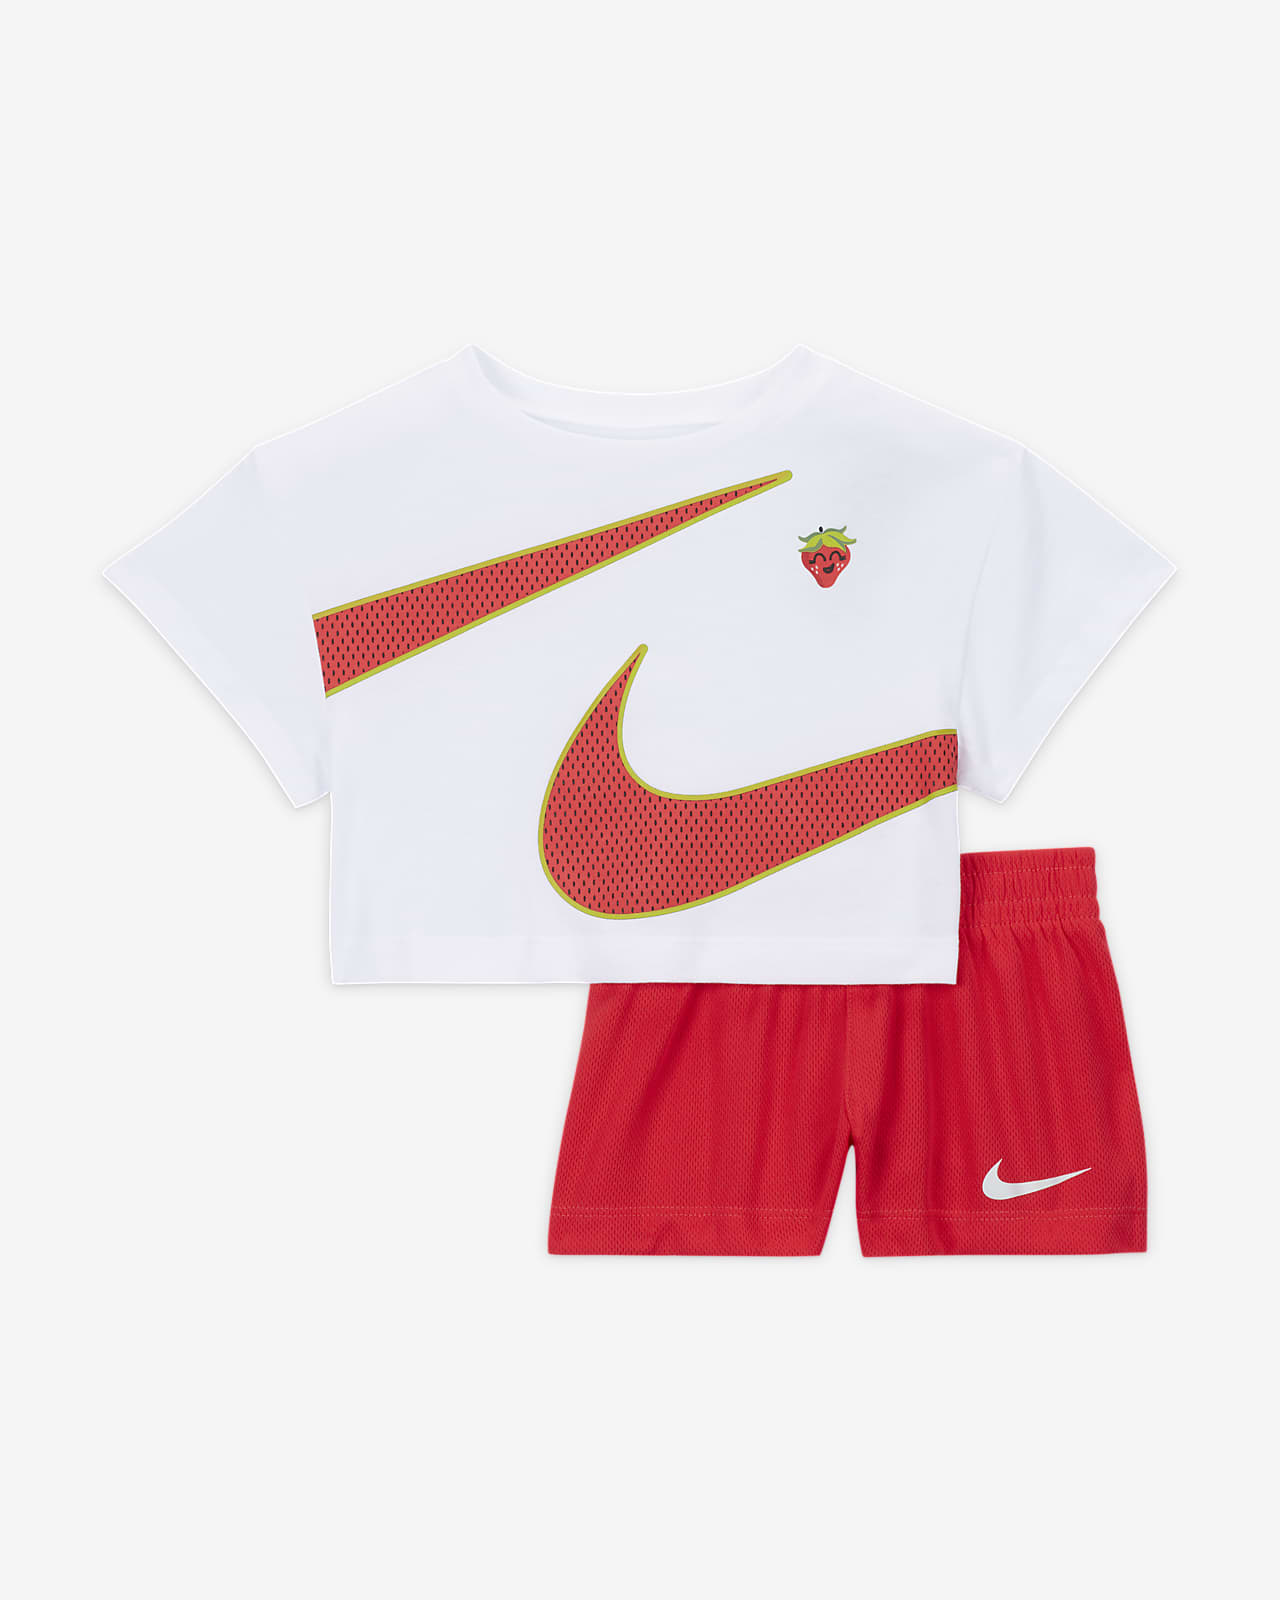 Conjunto de playera y shorts Nike (12 a 24 meses). Nike.com